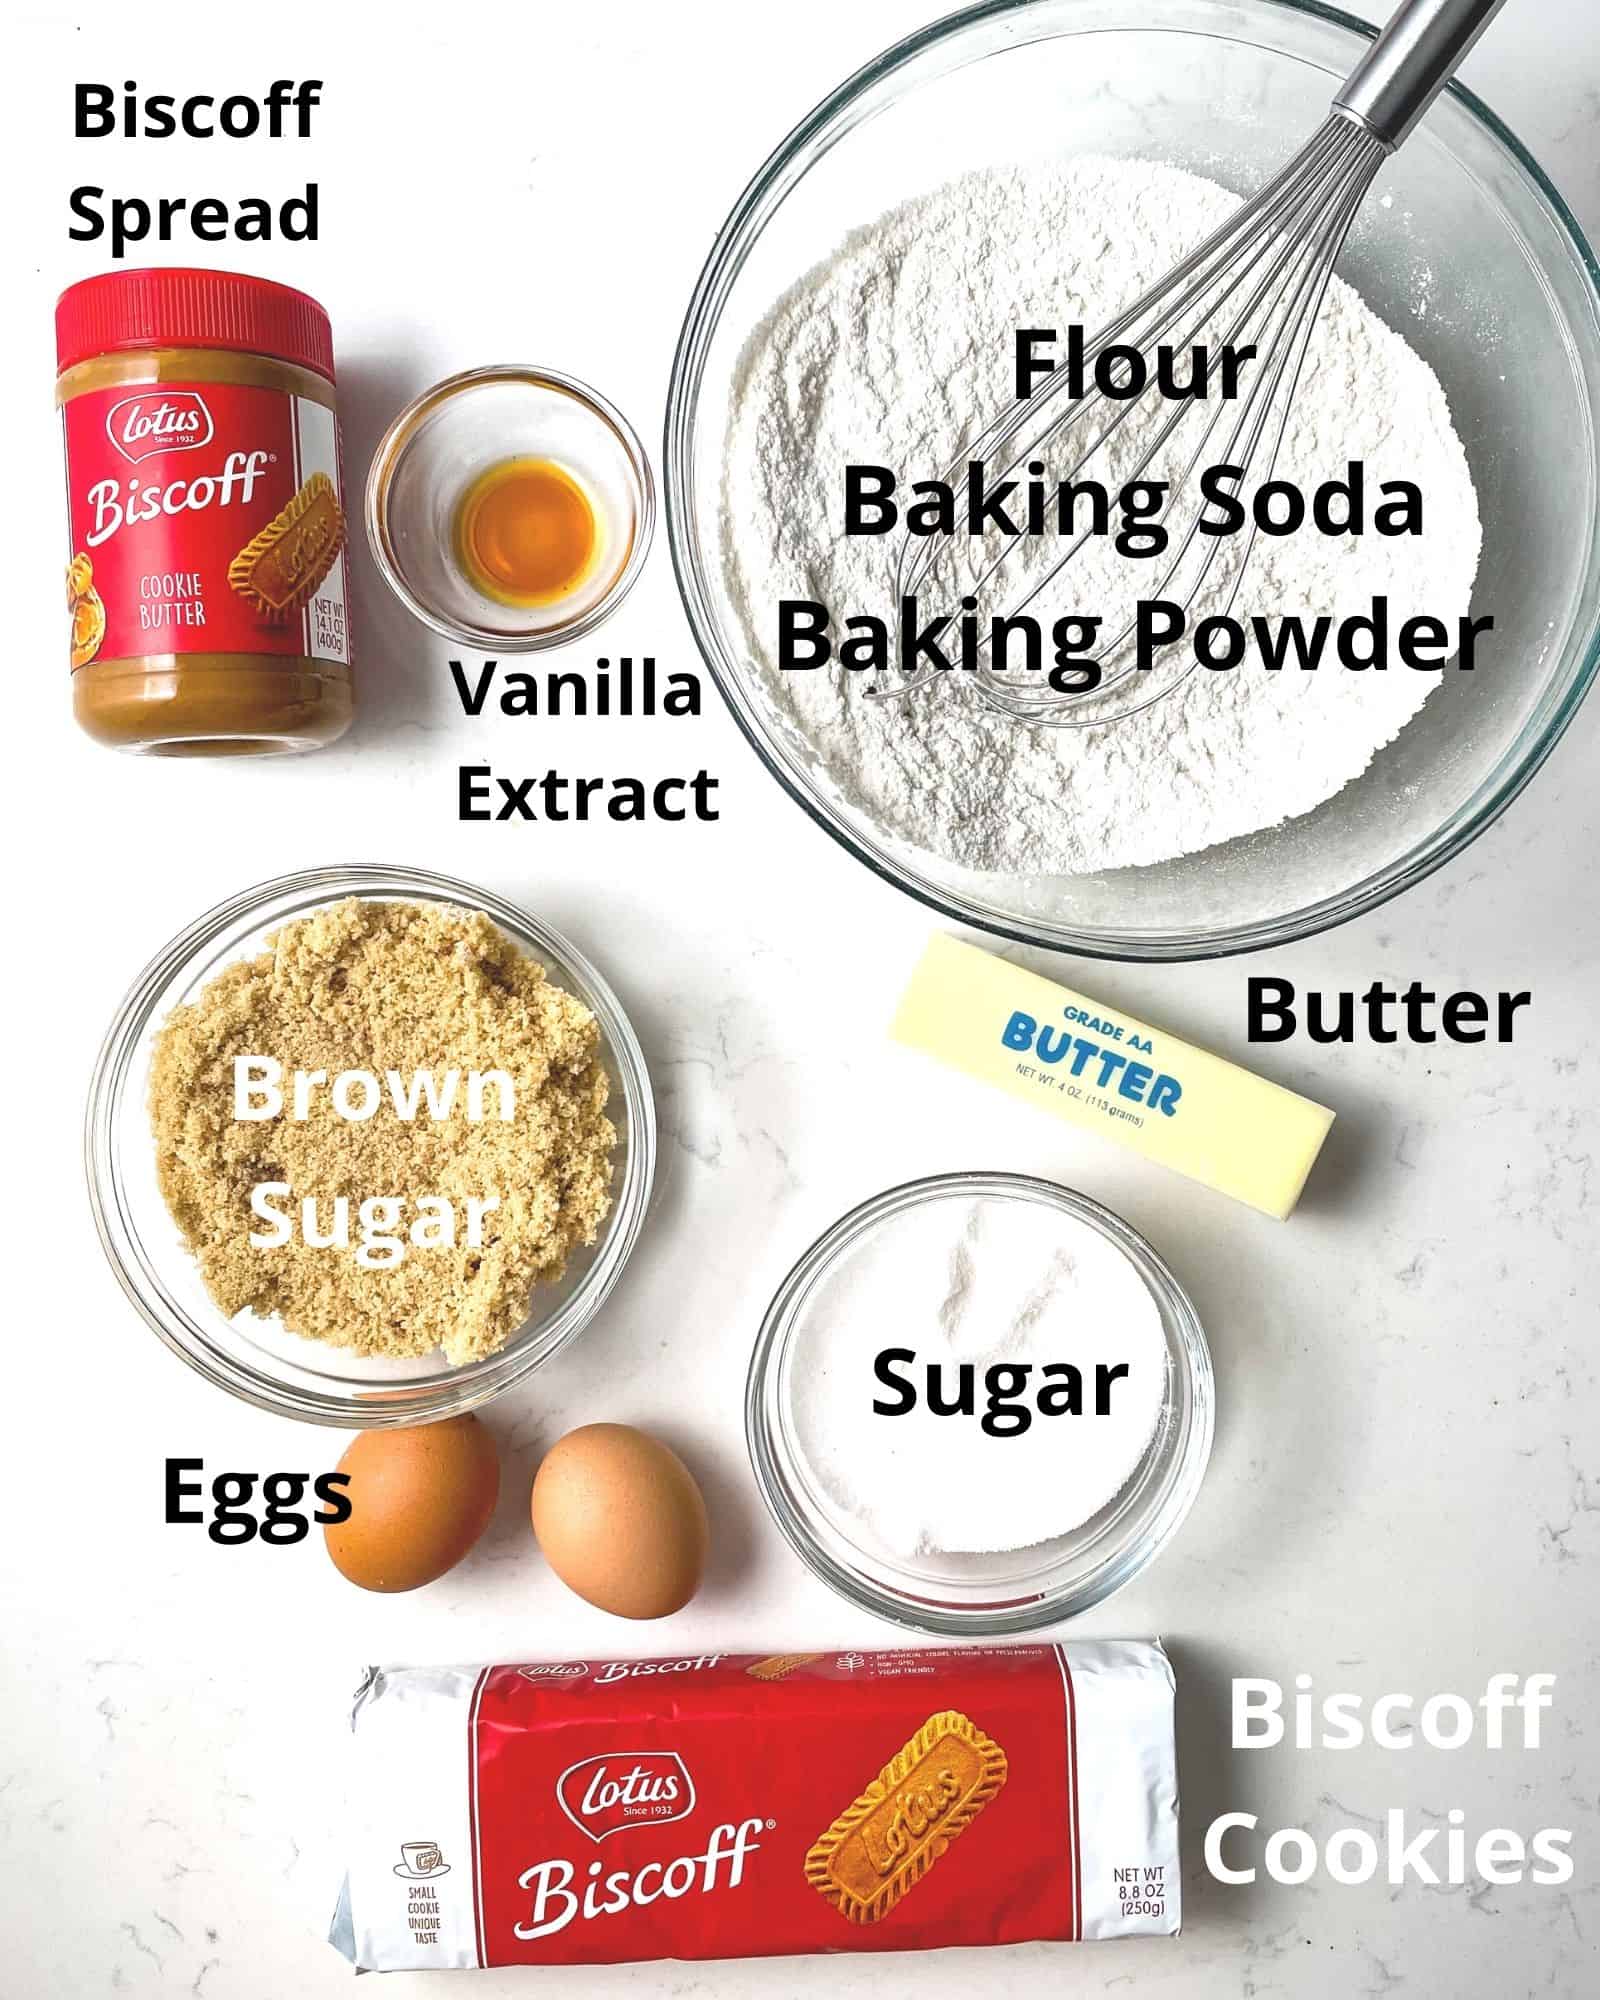 ingredients to make biscoff butter cookies - flour, baking soda, baking powder, biscoff spread, vanilla extract, brown sugar, sugar, eggs, butter, and biscoff cookies.